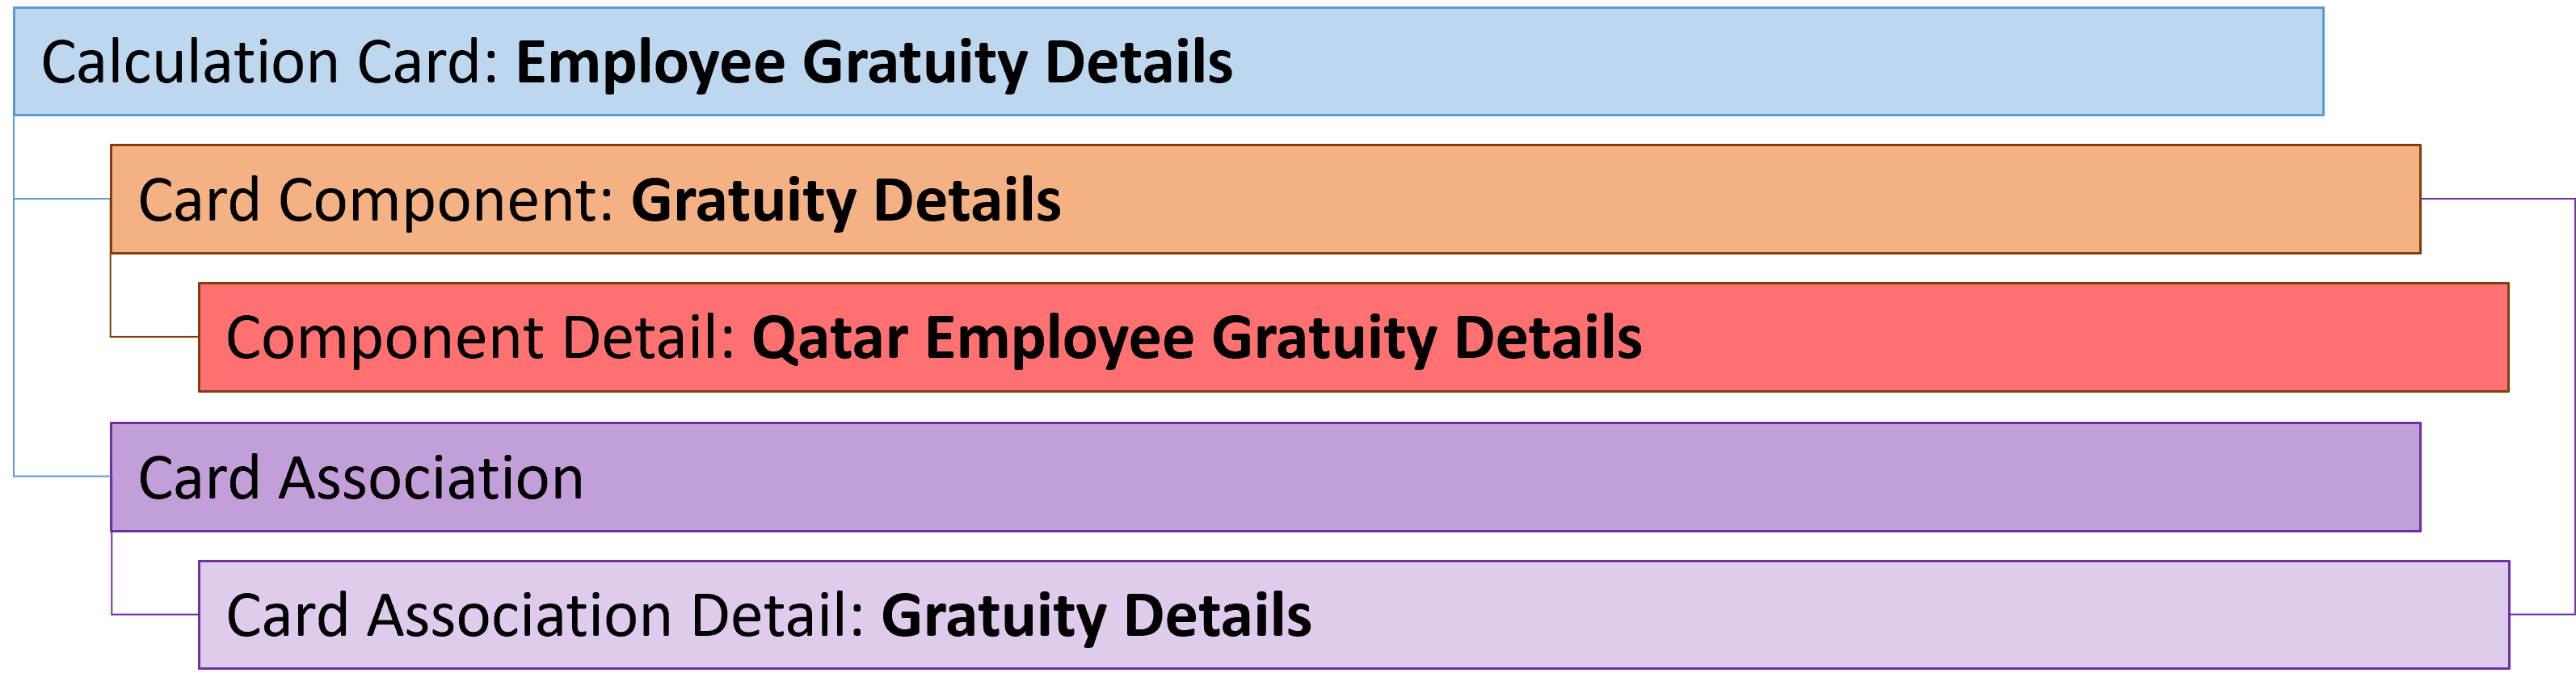 qa employee gratuity details card hierarchy